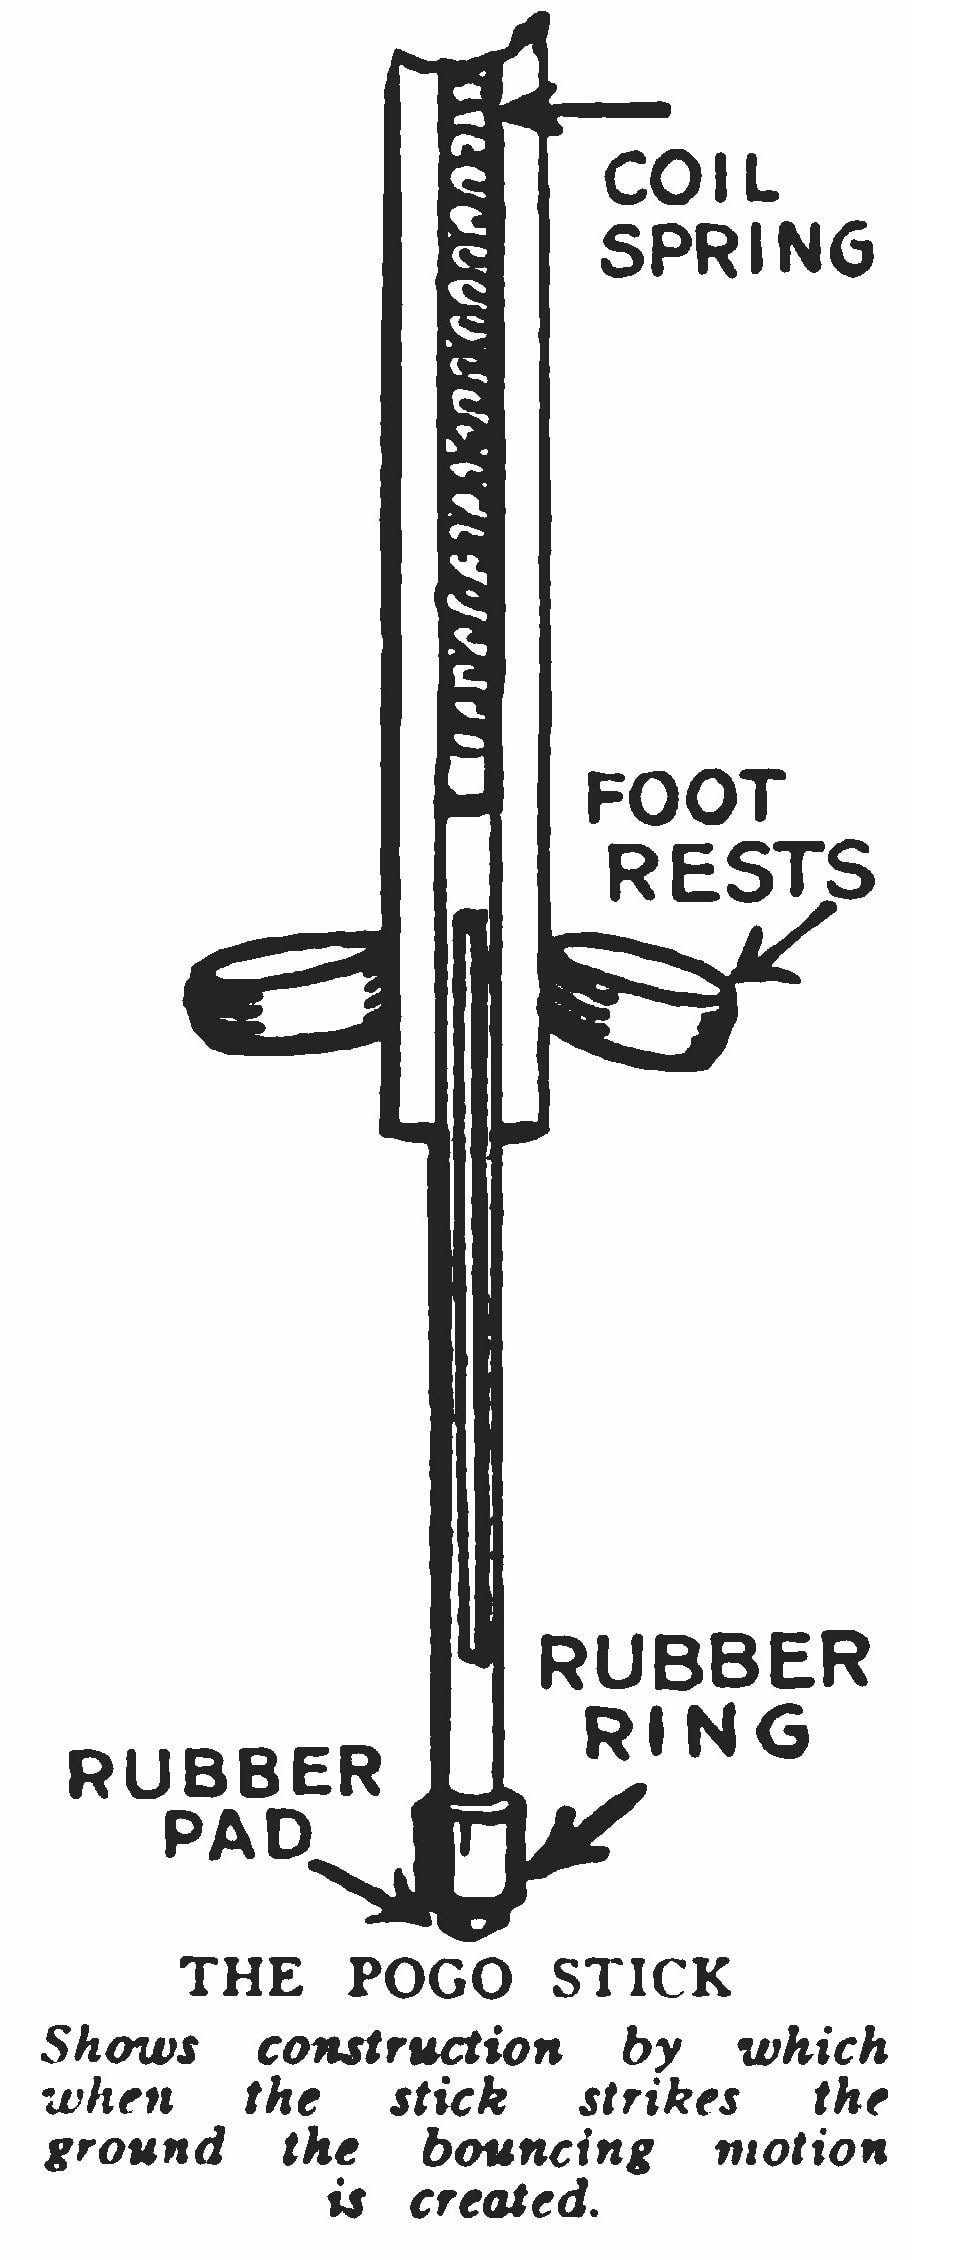 Image of pogo stick contrasting with three-legged stool needed to get through the coronavirus epidemic.